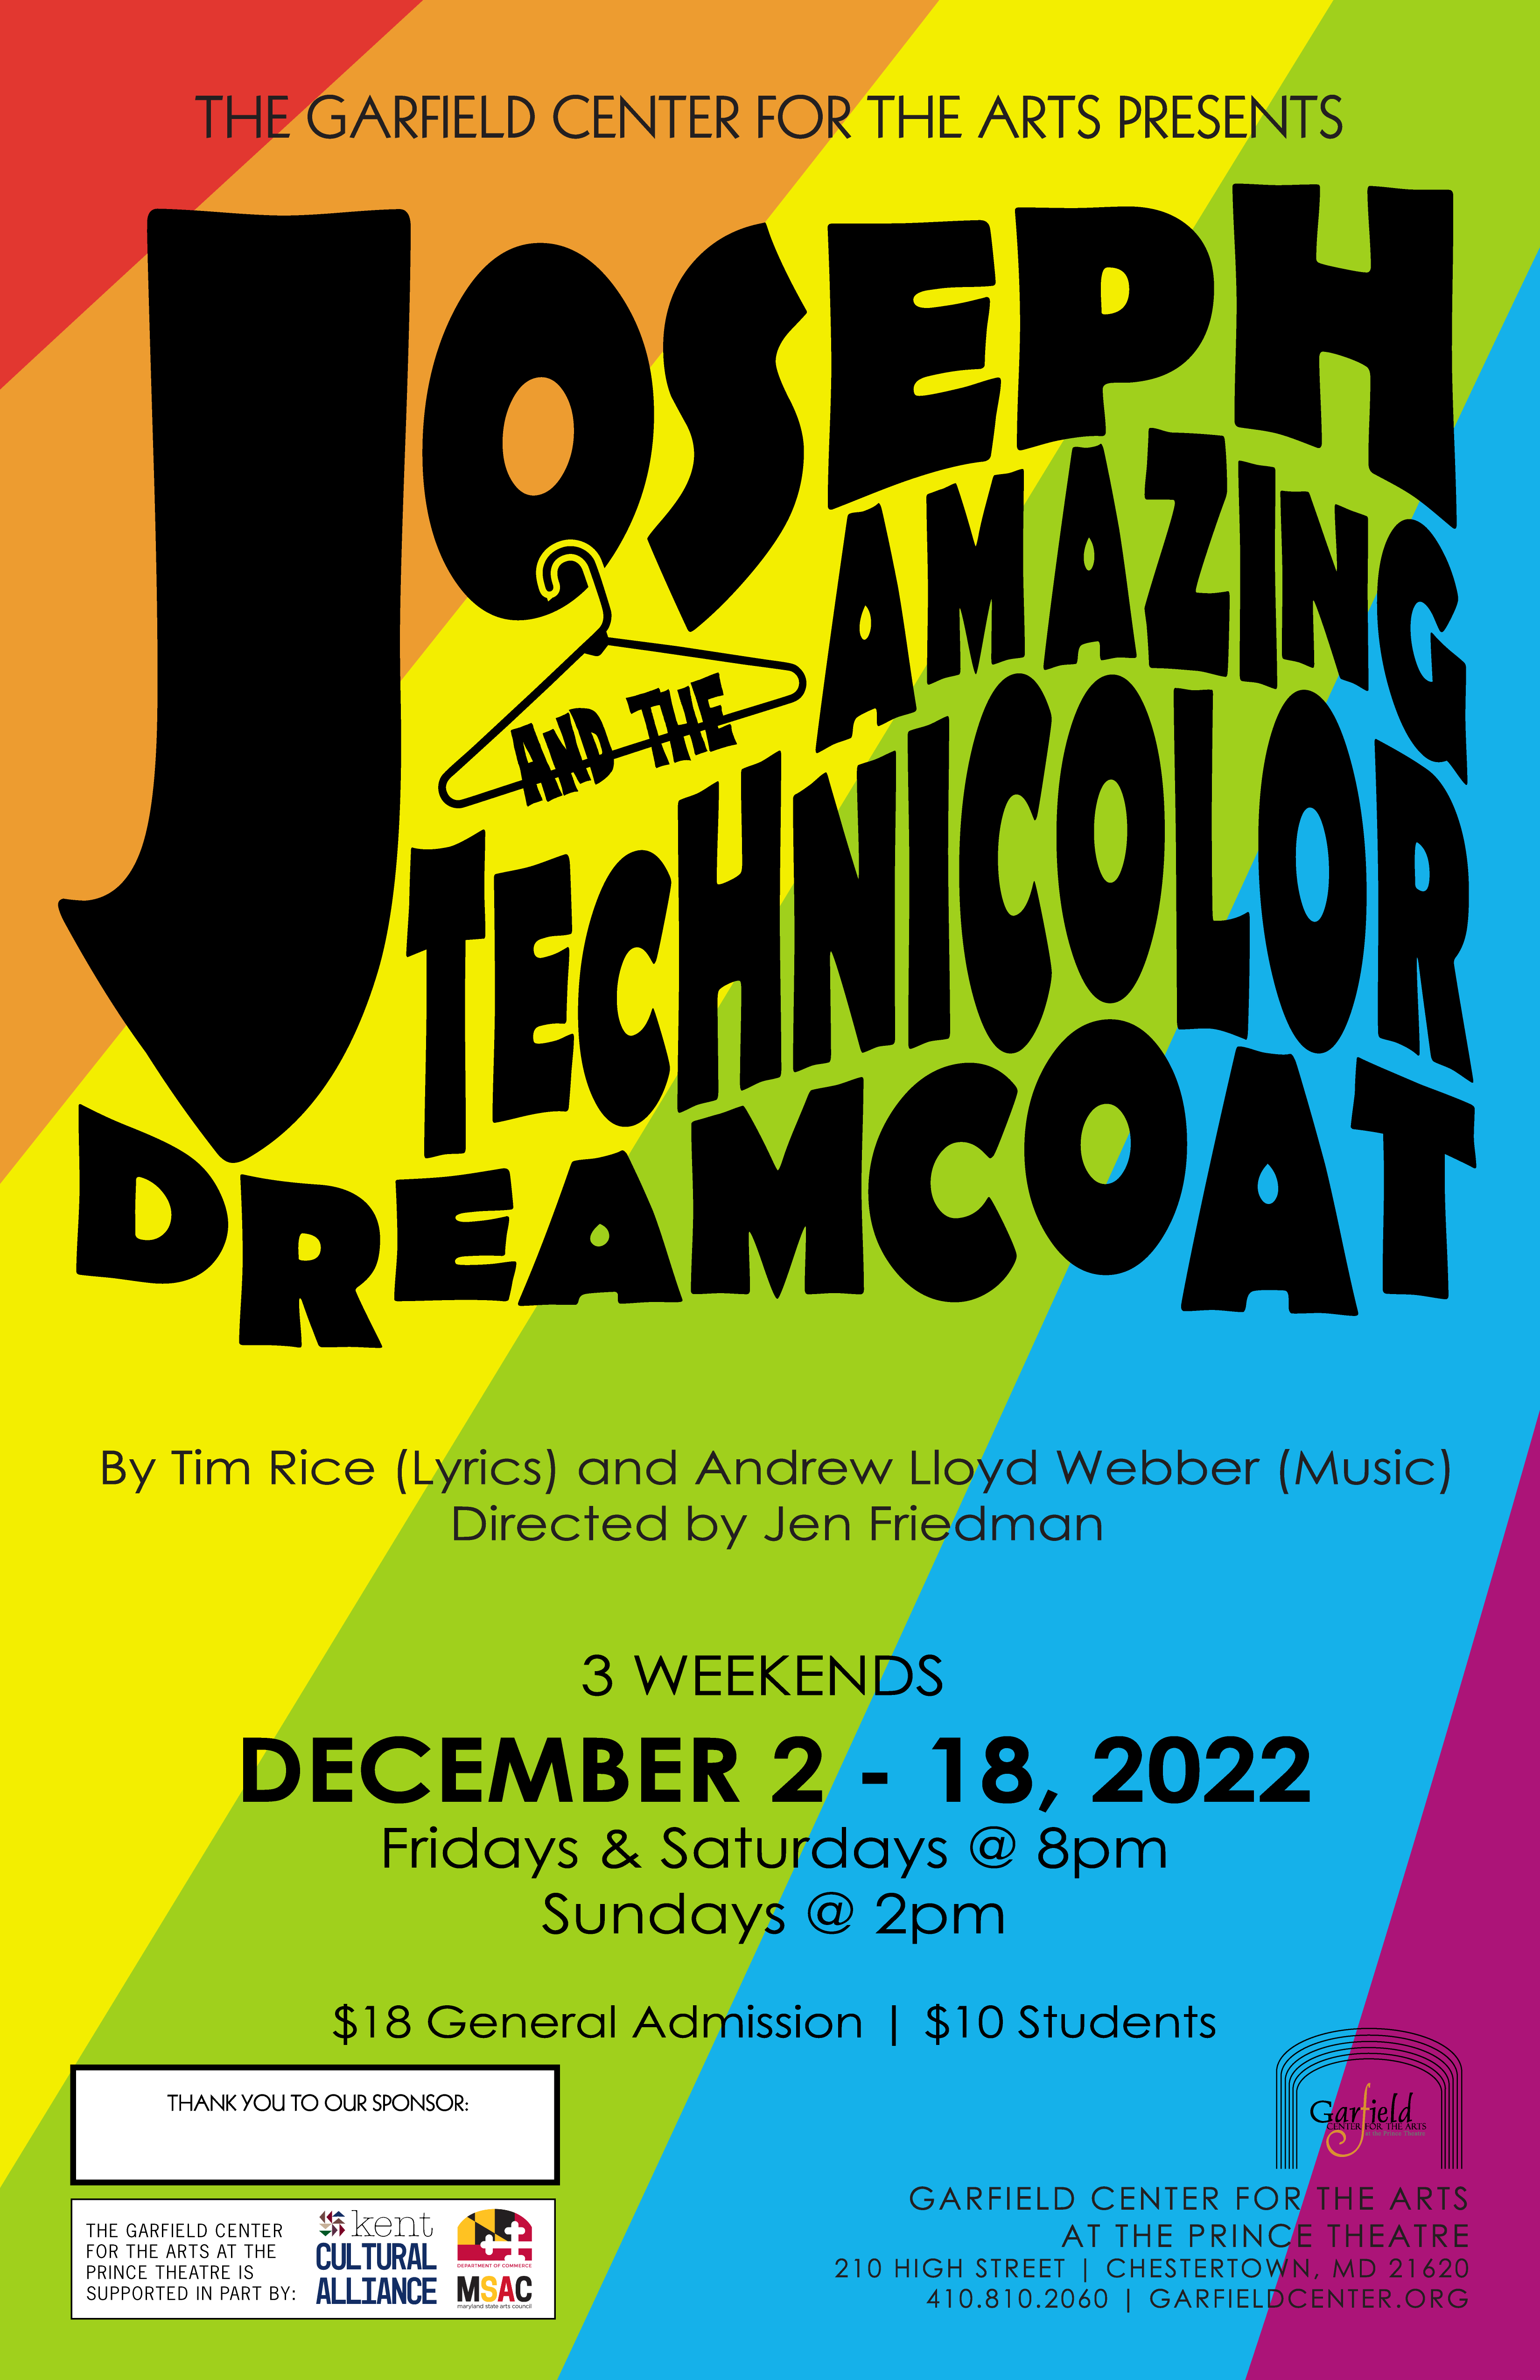 The Garfield presents Joseph and the Amazing Technicolor Dreamcoat